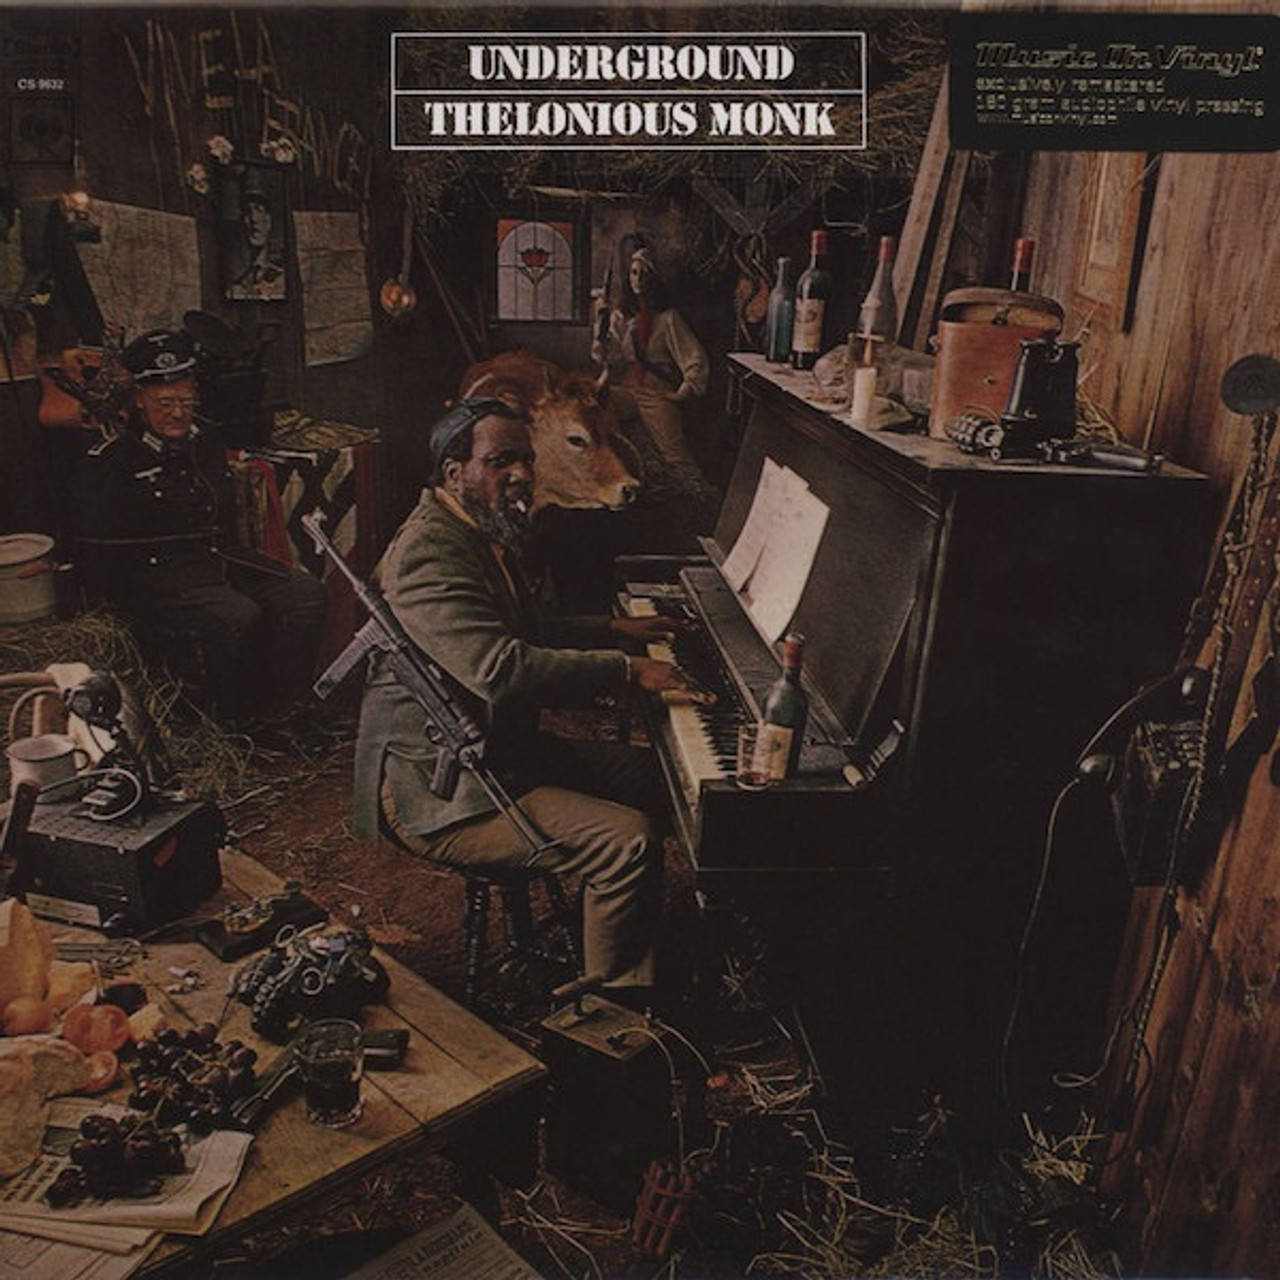 Thelonious Monk Undergound Music Album Cover Wallpaper